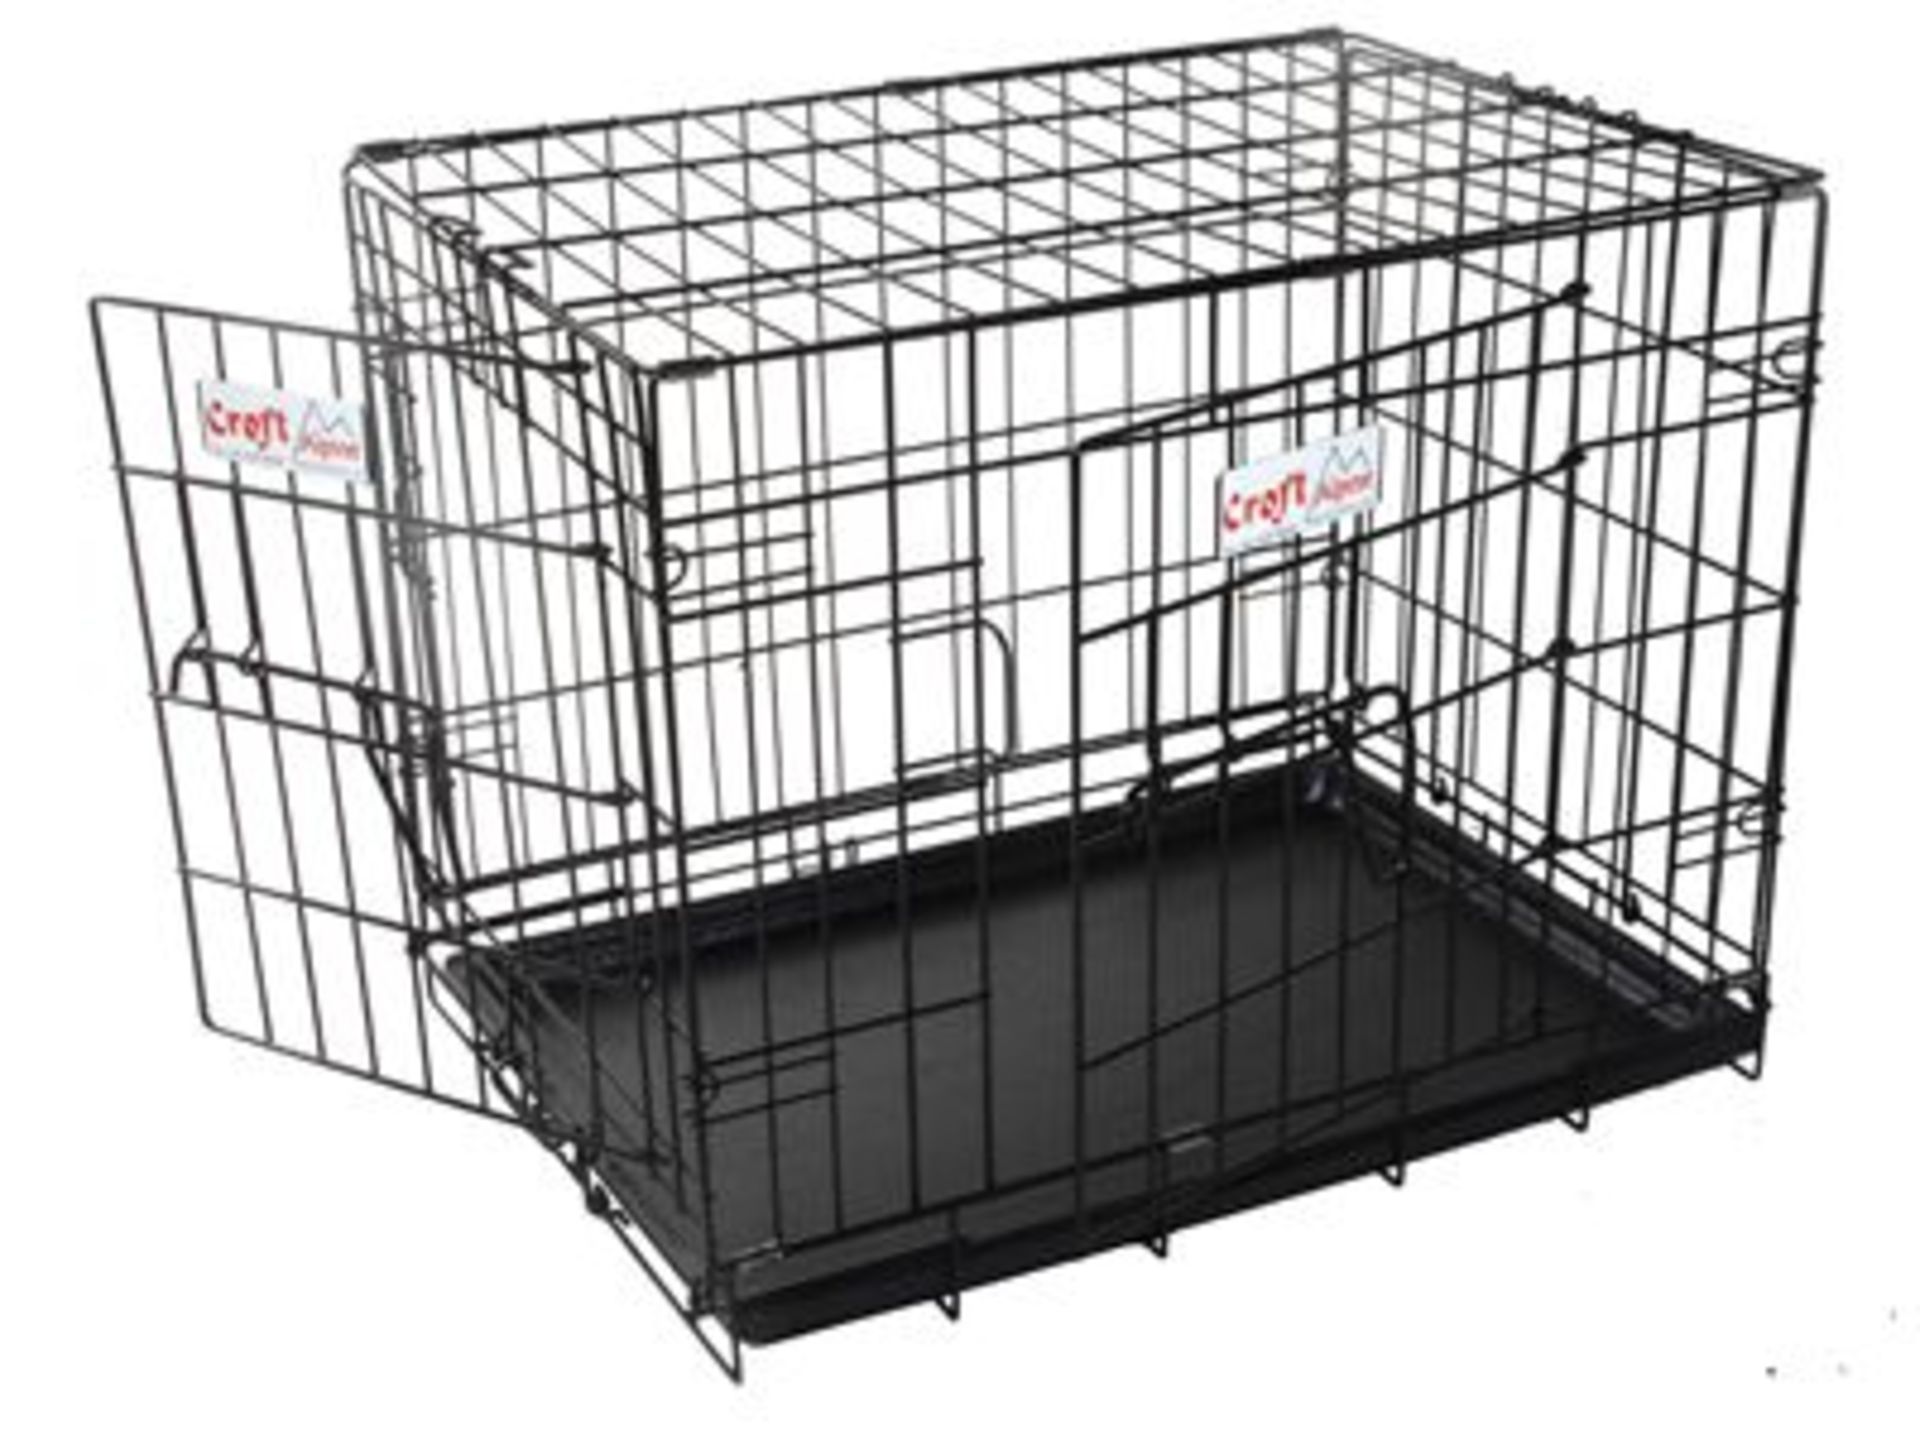 Alpine lightweight dog crate 30"| RRP £49.00